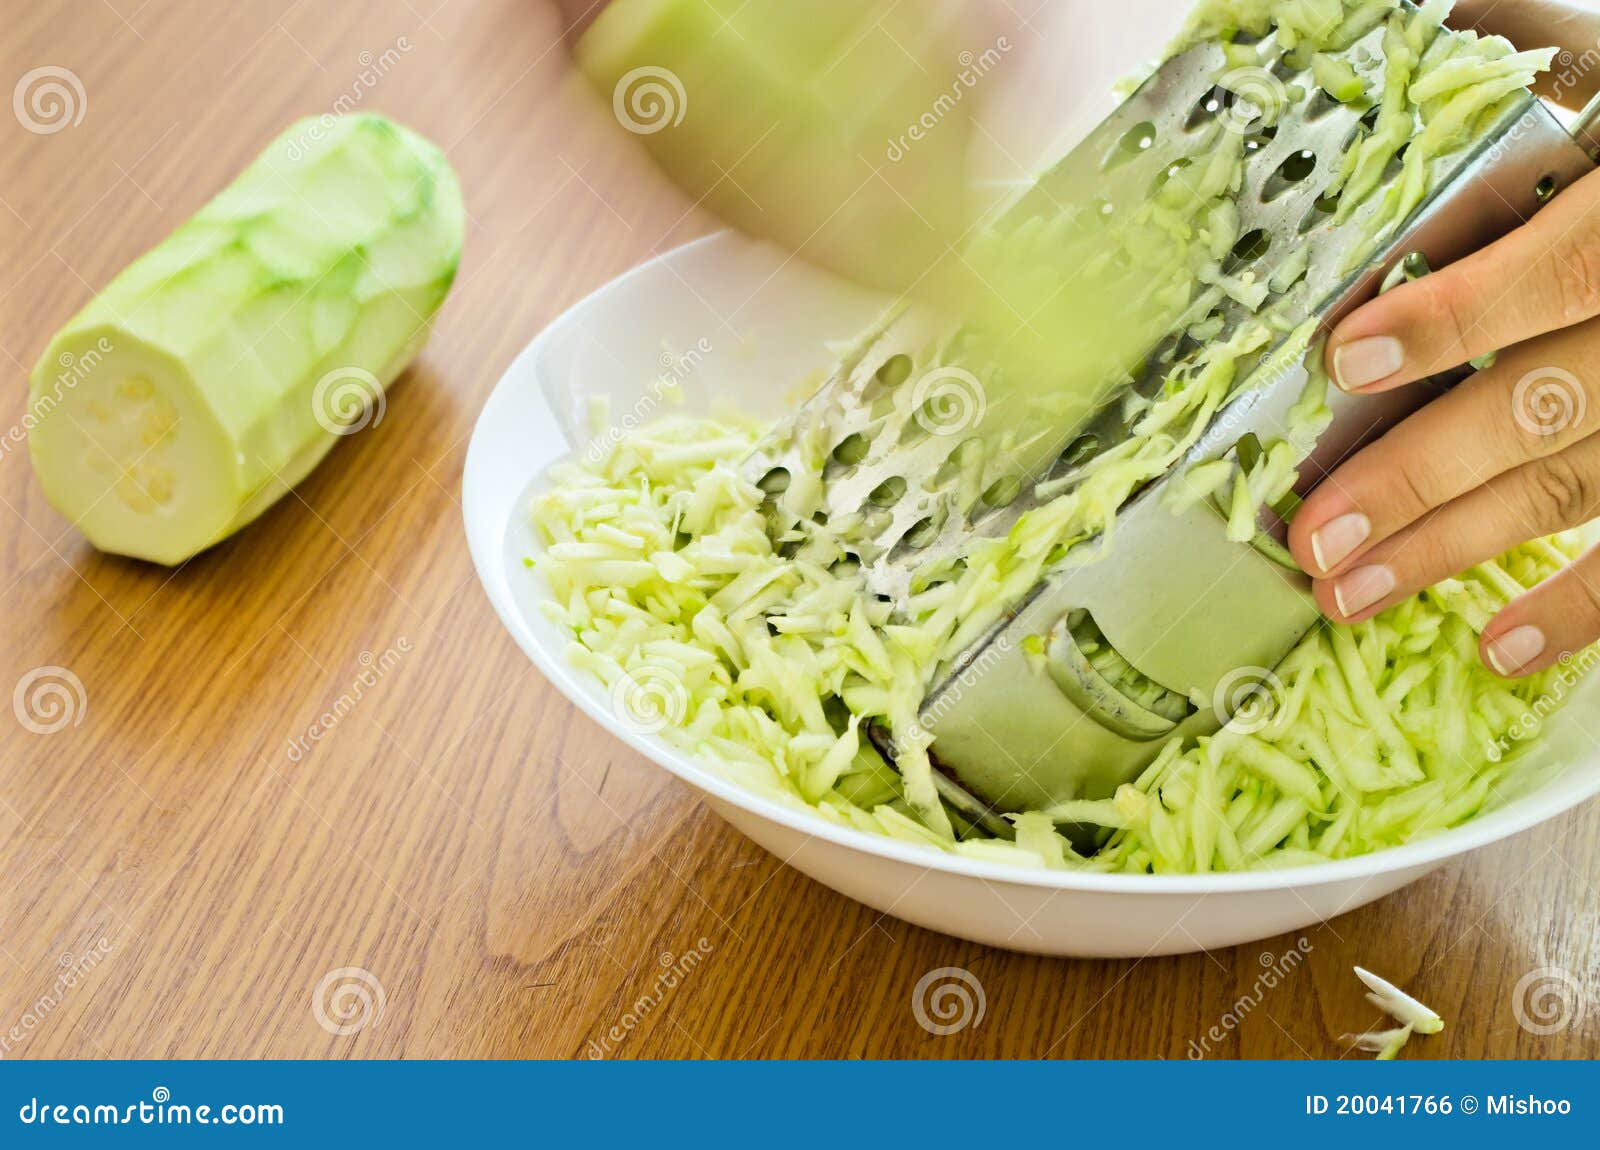 hands grating zucchini